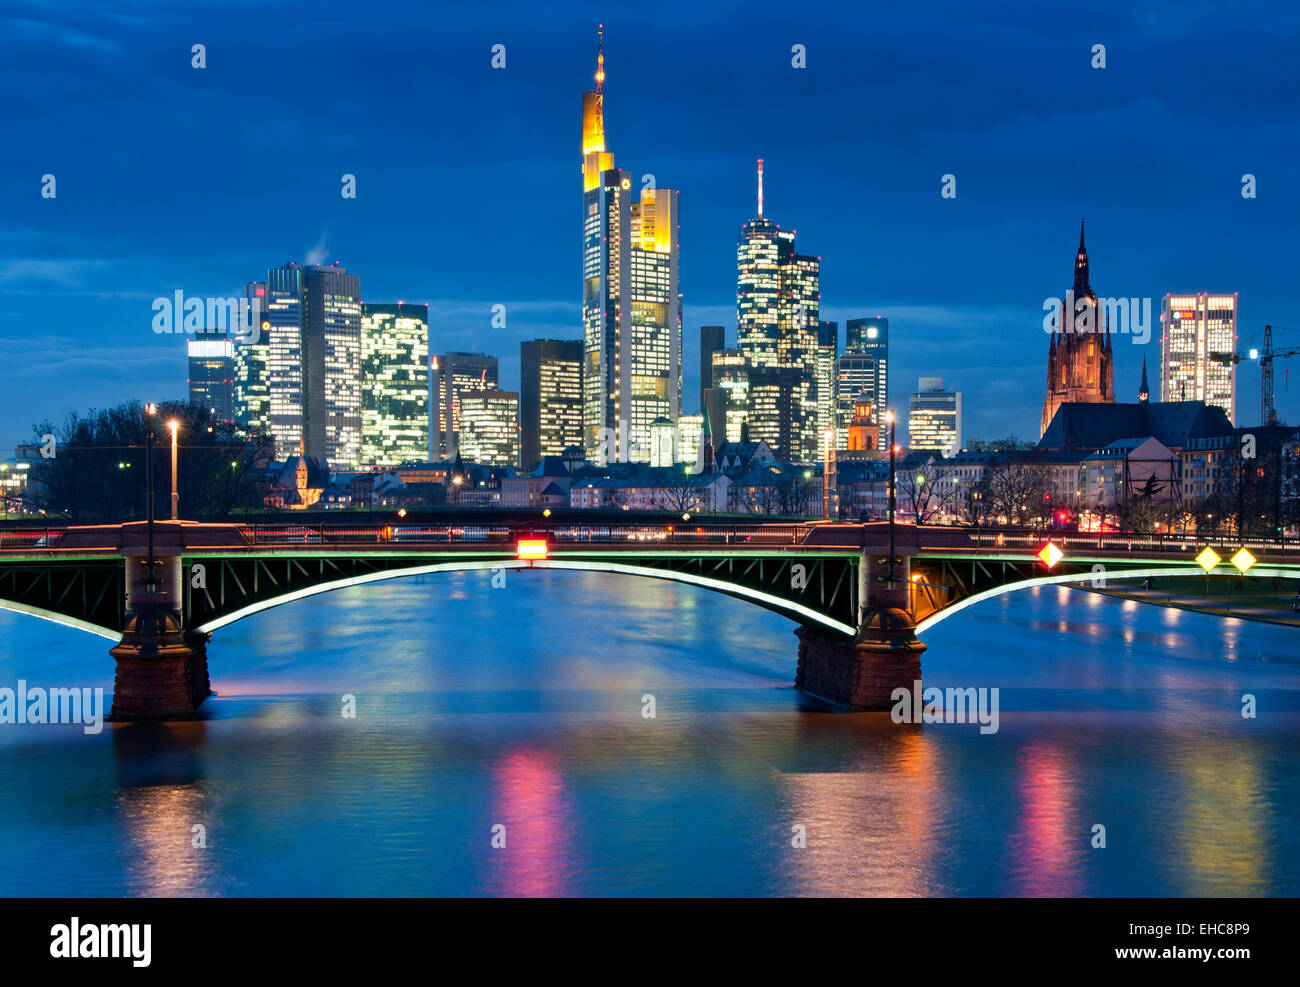 The River Main, Ignatz Bubis Bridge, Dom Cathedral & Skyscrapers of Frankfurt's Business District, Frankfurt, Germany, Europe Stock Photo